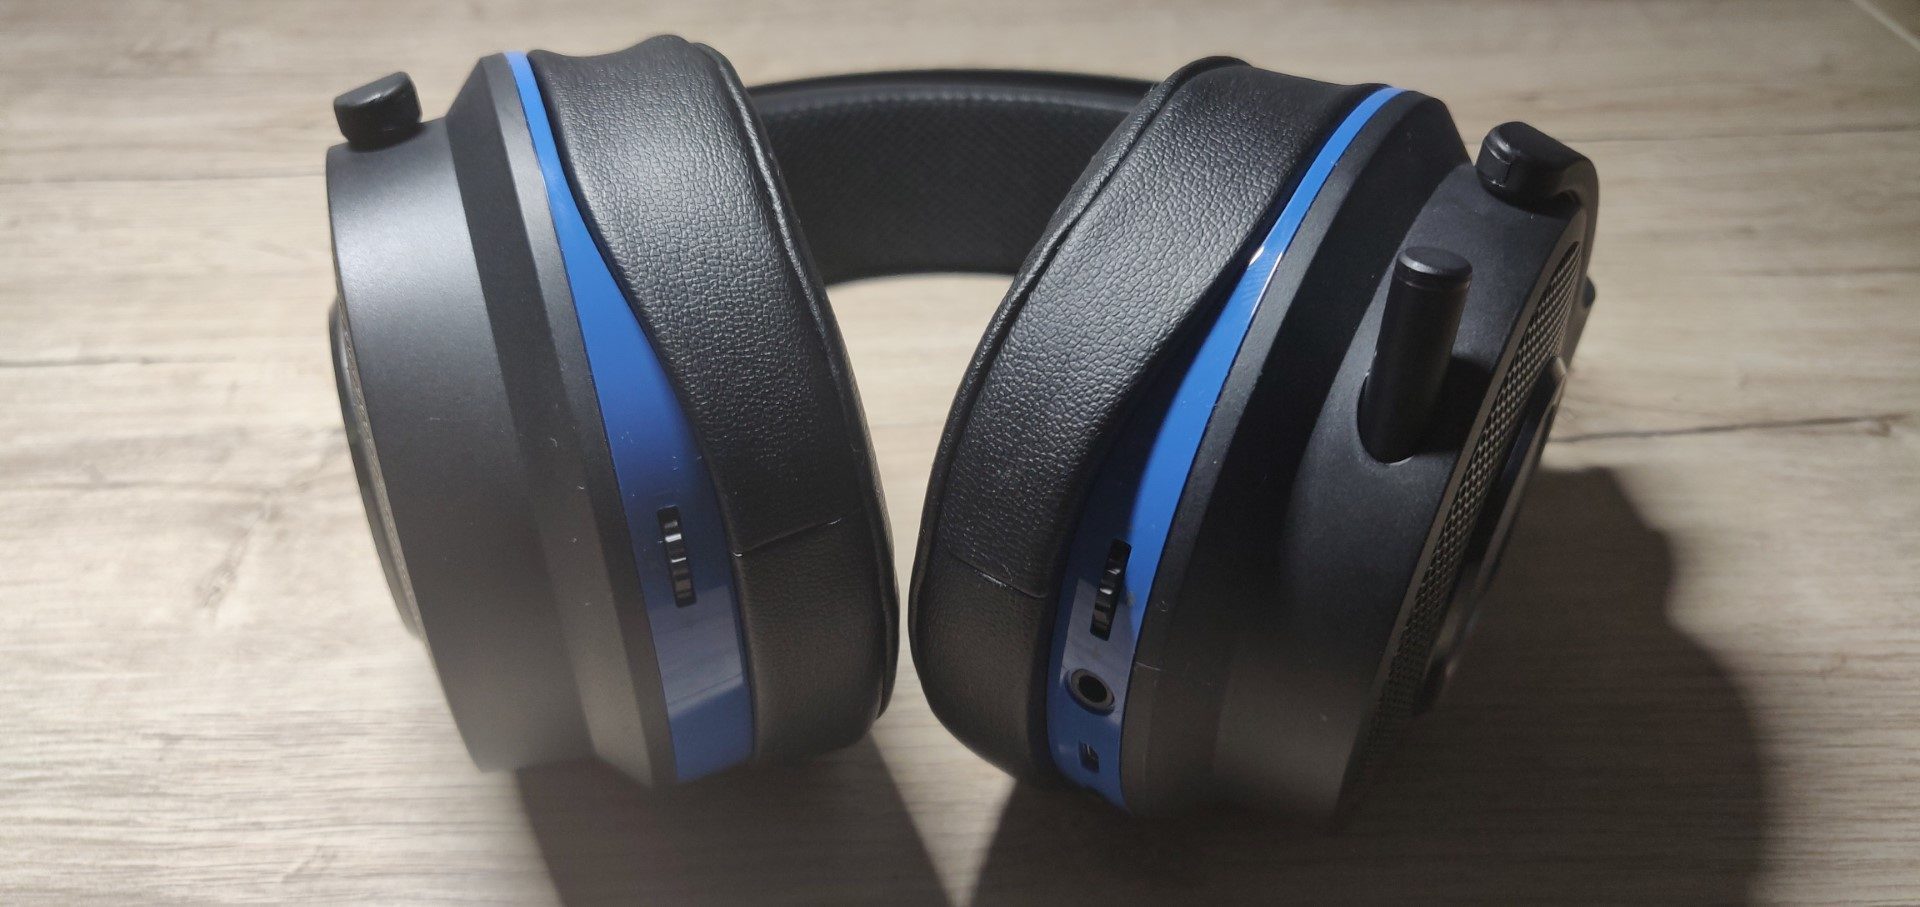 Razer Thresher para PS4 se acerca a la perfección en auriculares inalámbricos